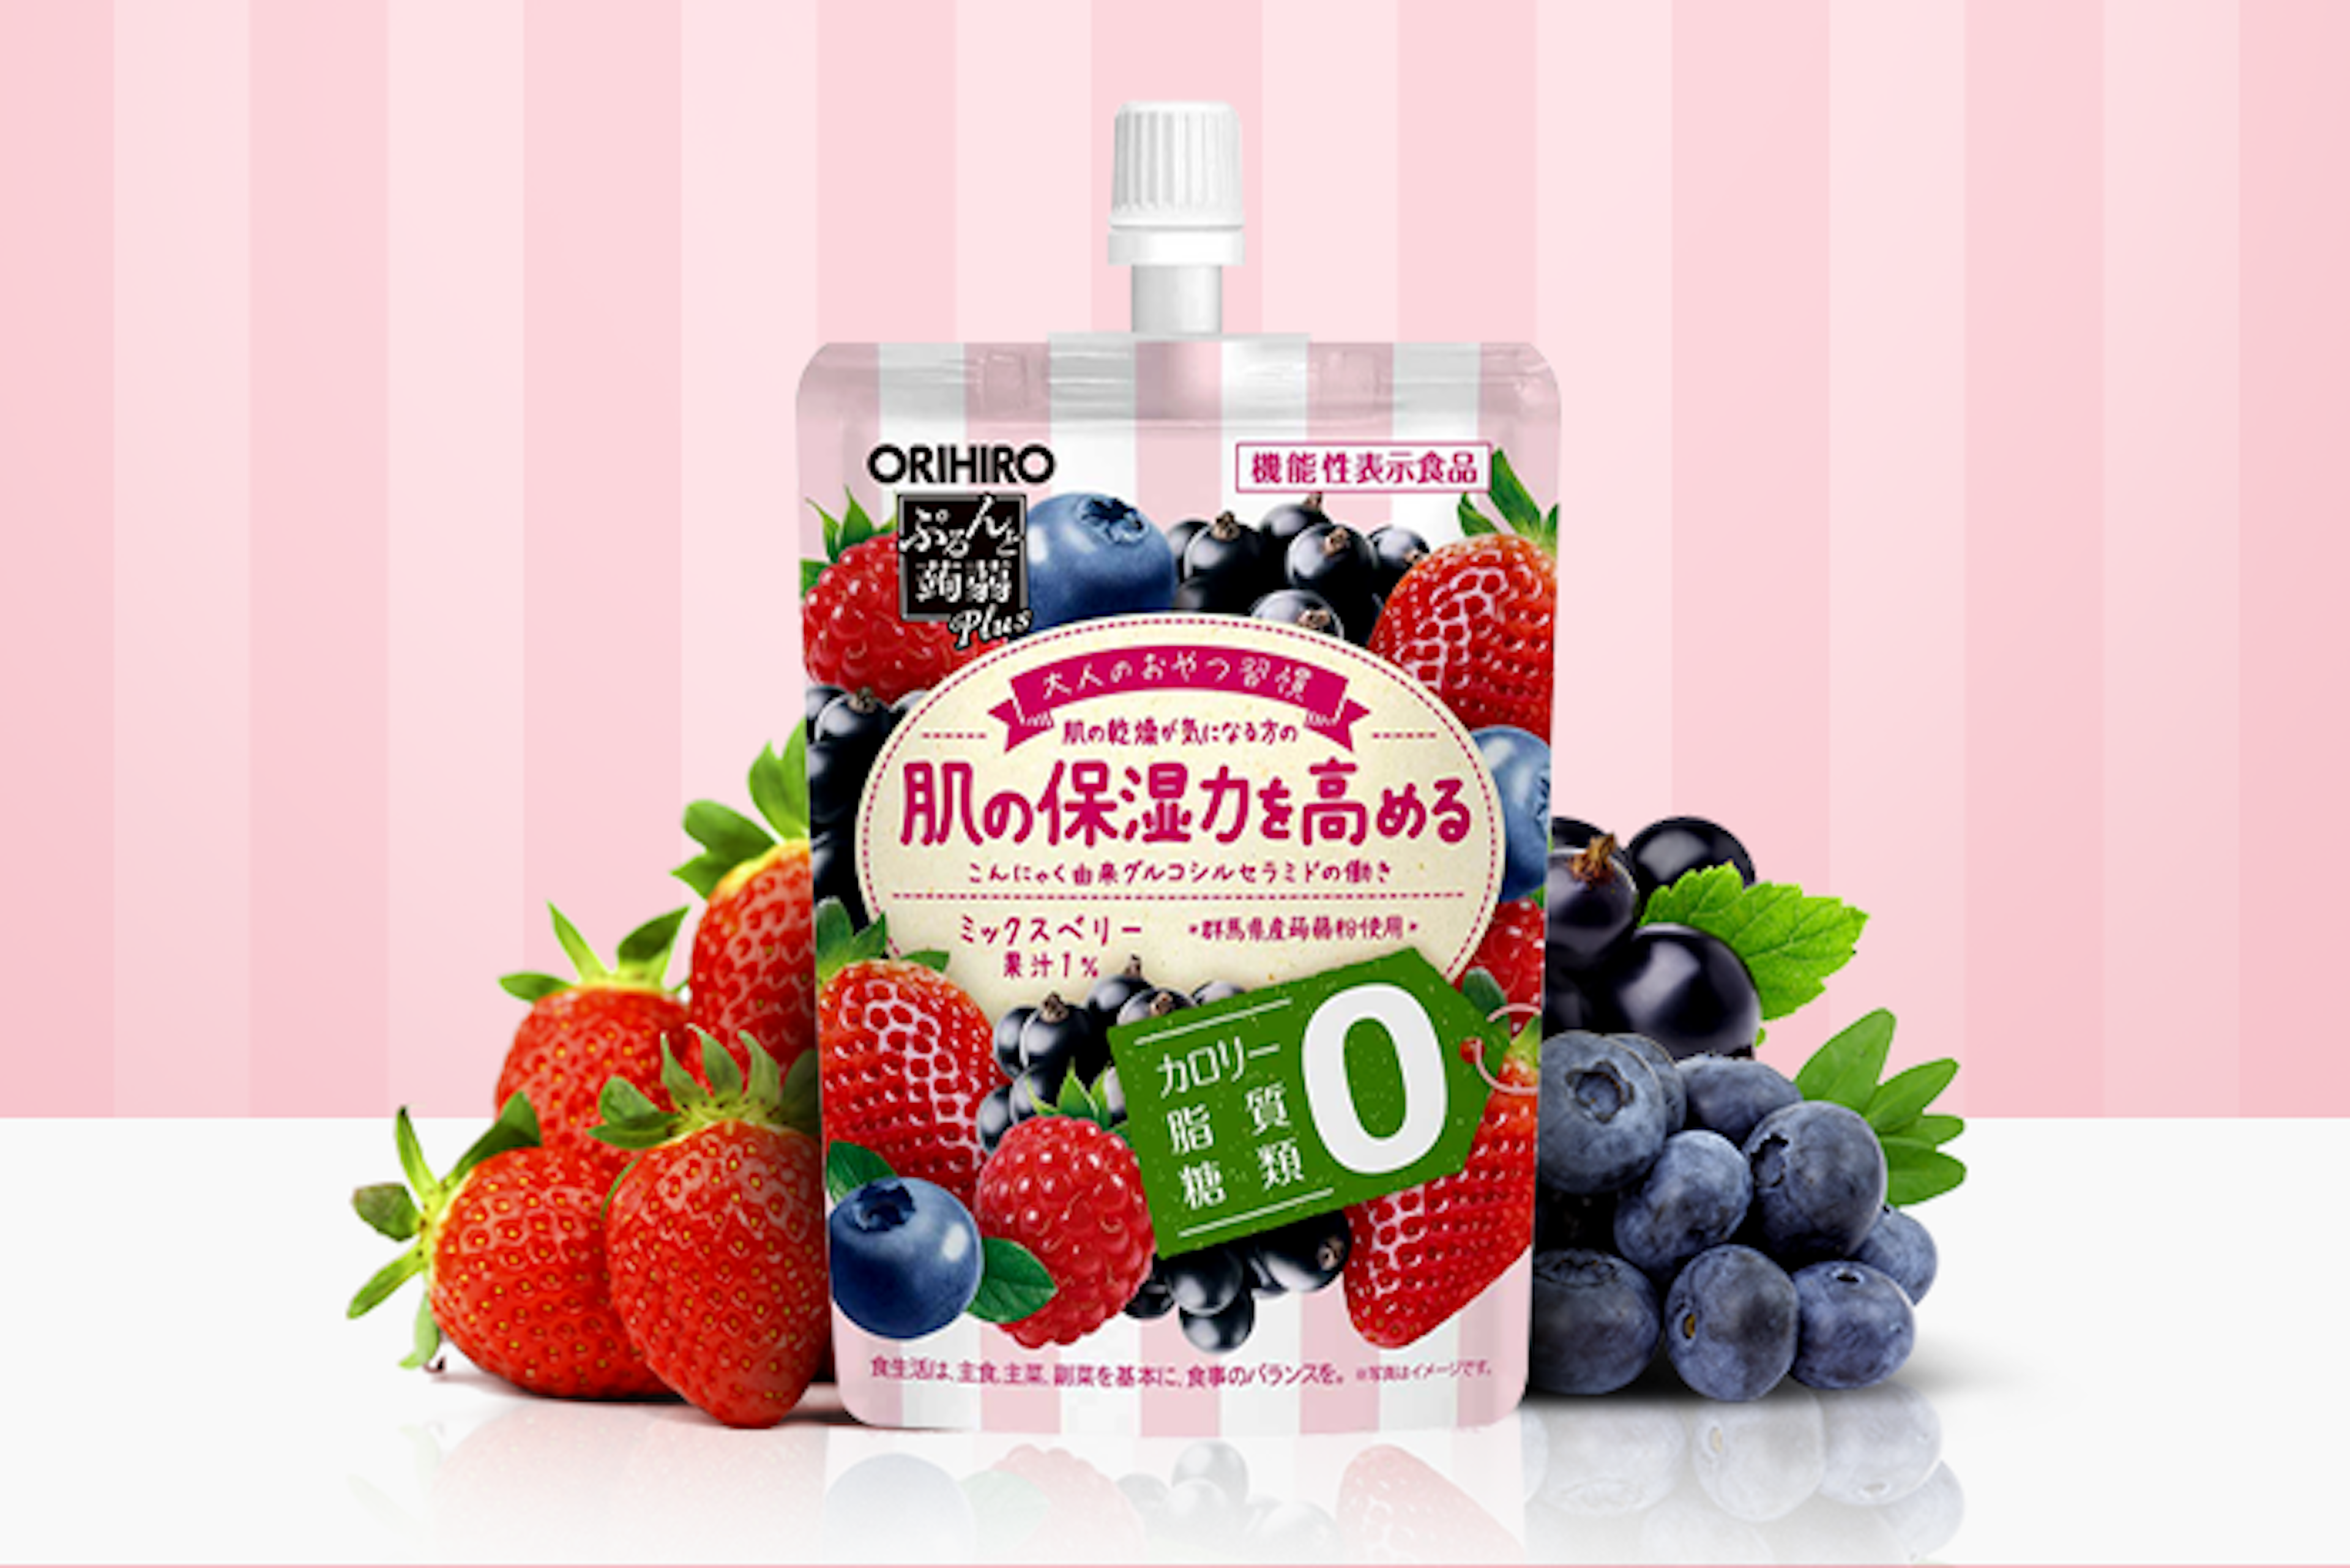 ORIHIRO Puru Puru Konjac Jelly Drink Mixed Berry Flavor 130g - Calorie-Free, Healthy Snack